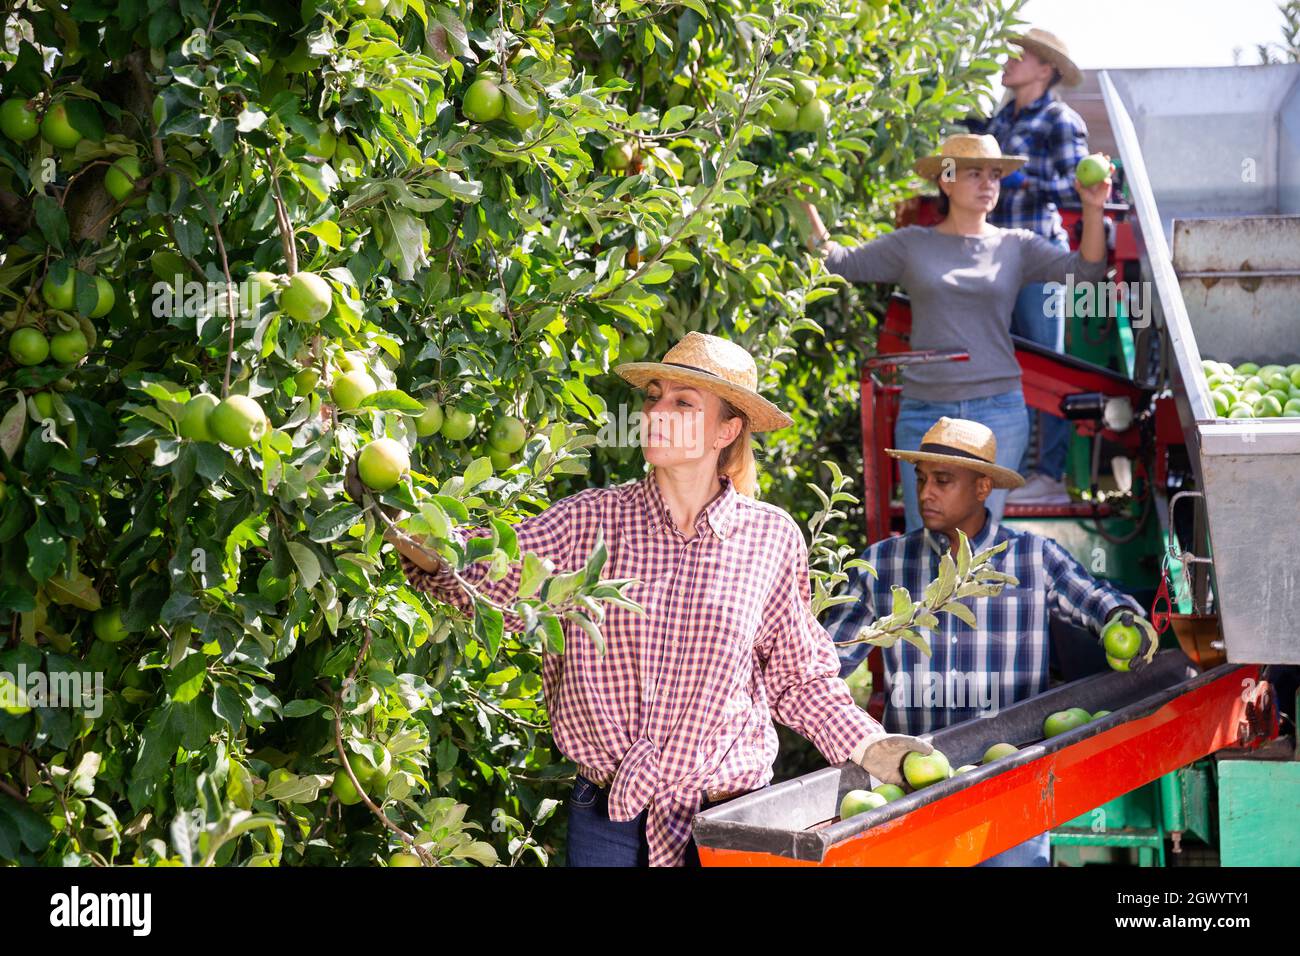 Workers harvesting ripe apples using sorting machine Stock Photo